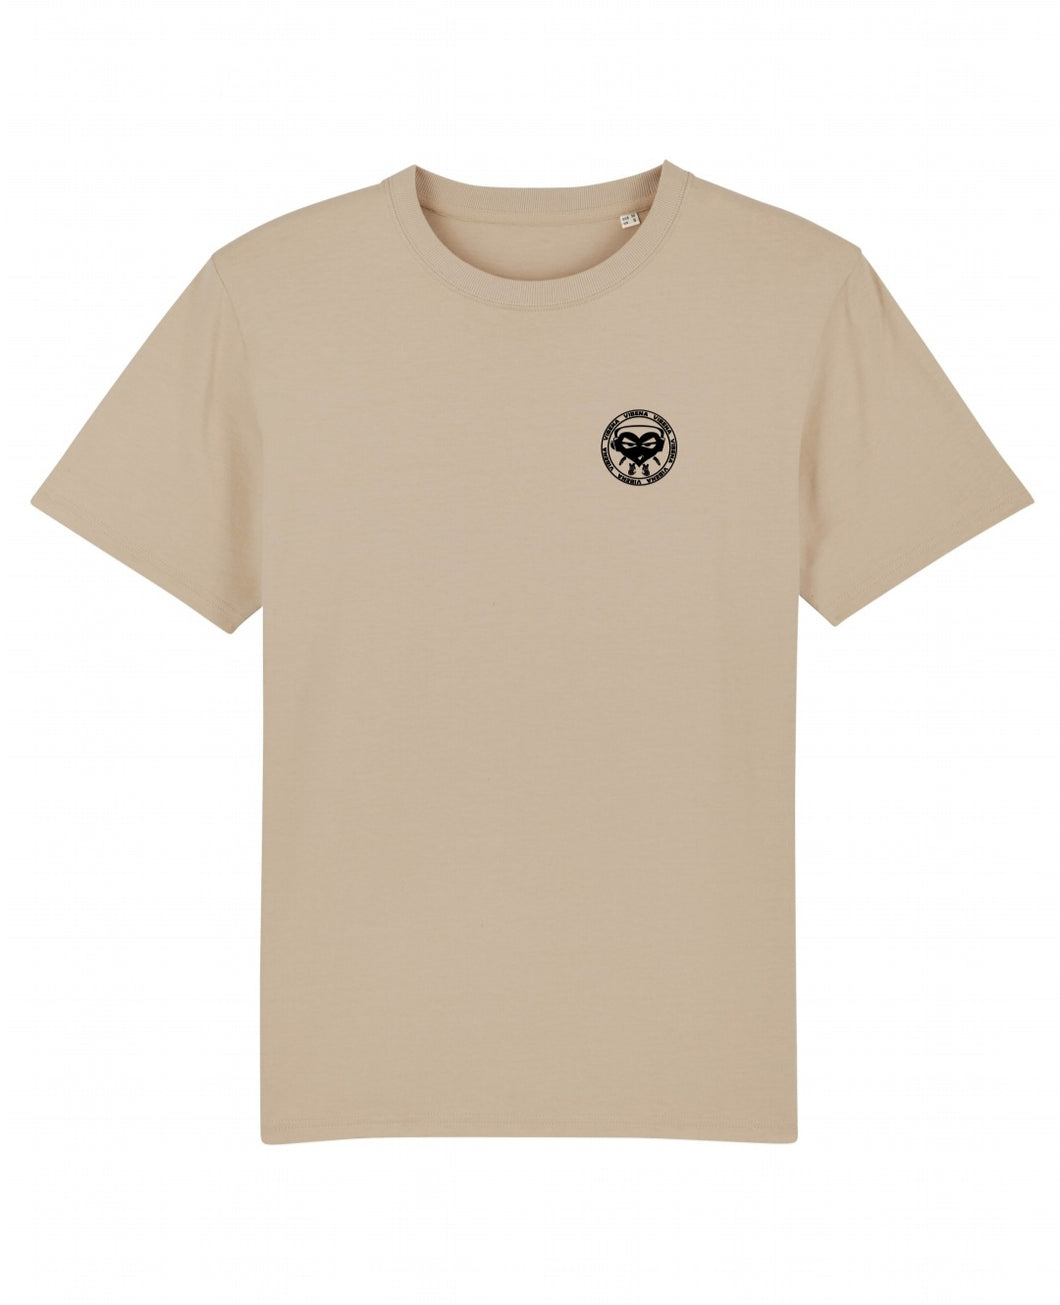 Vibena new style t-shirt. Desert dust with black Vibena character logo (front logo only) **Free UK Postage**